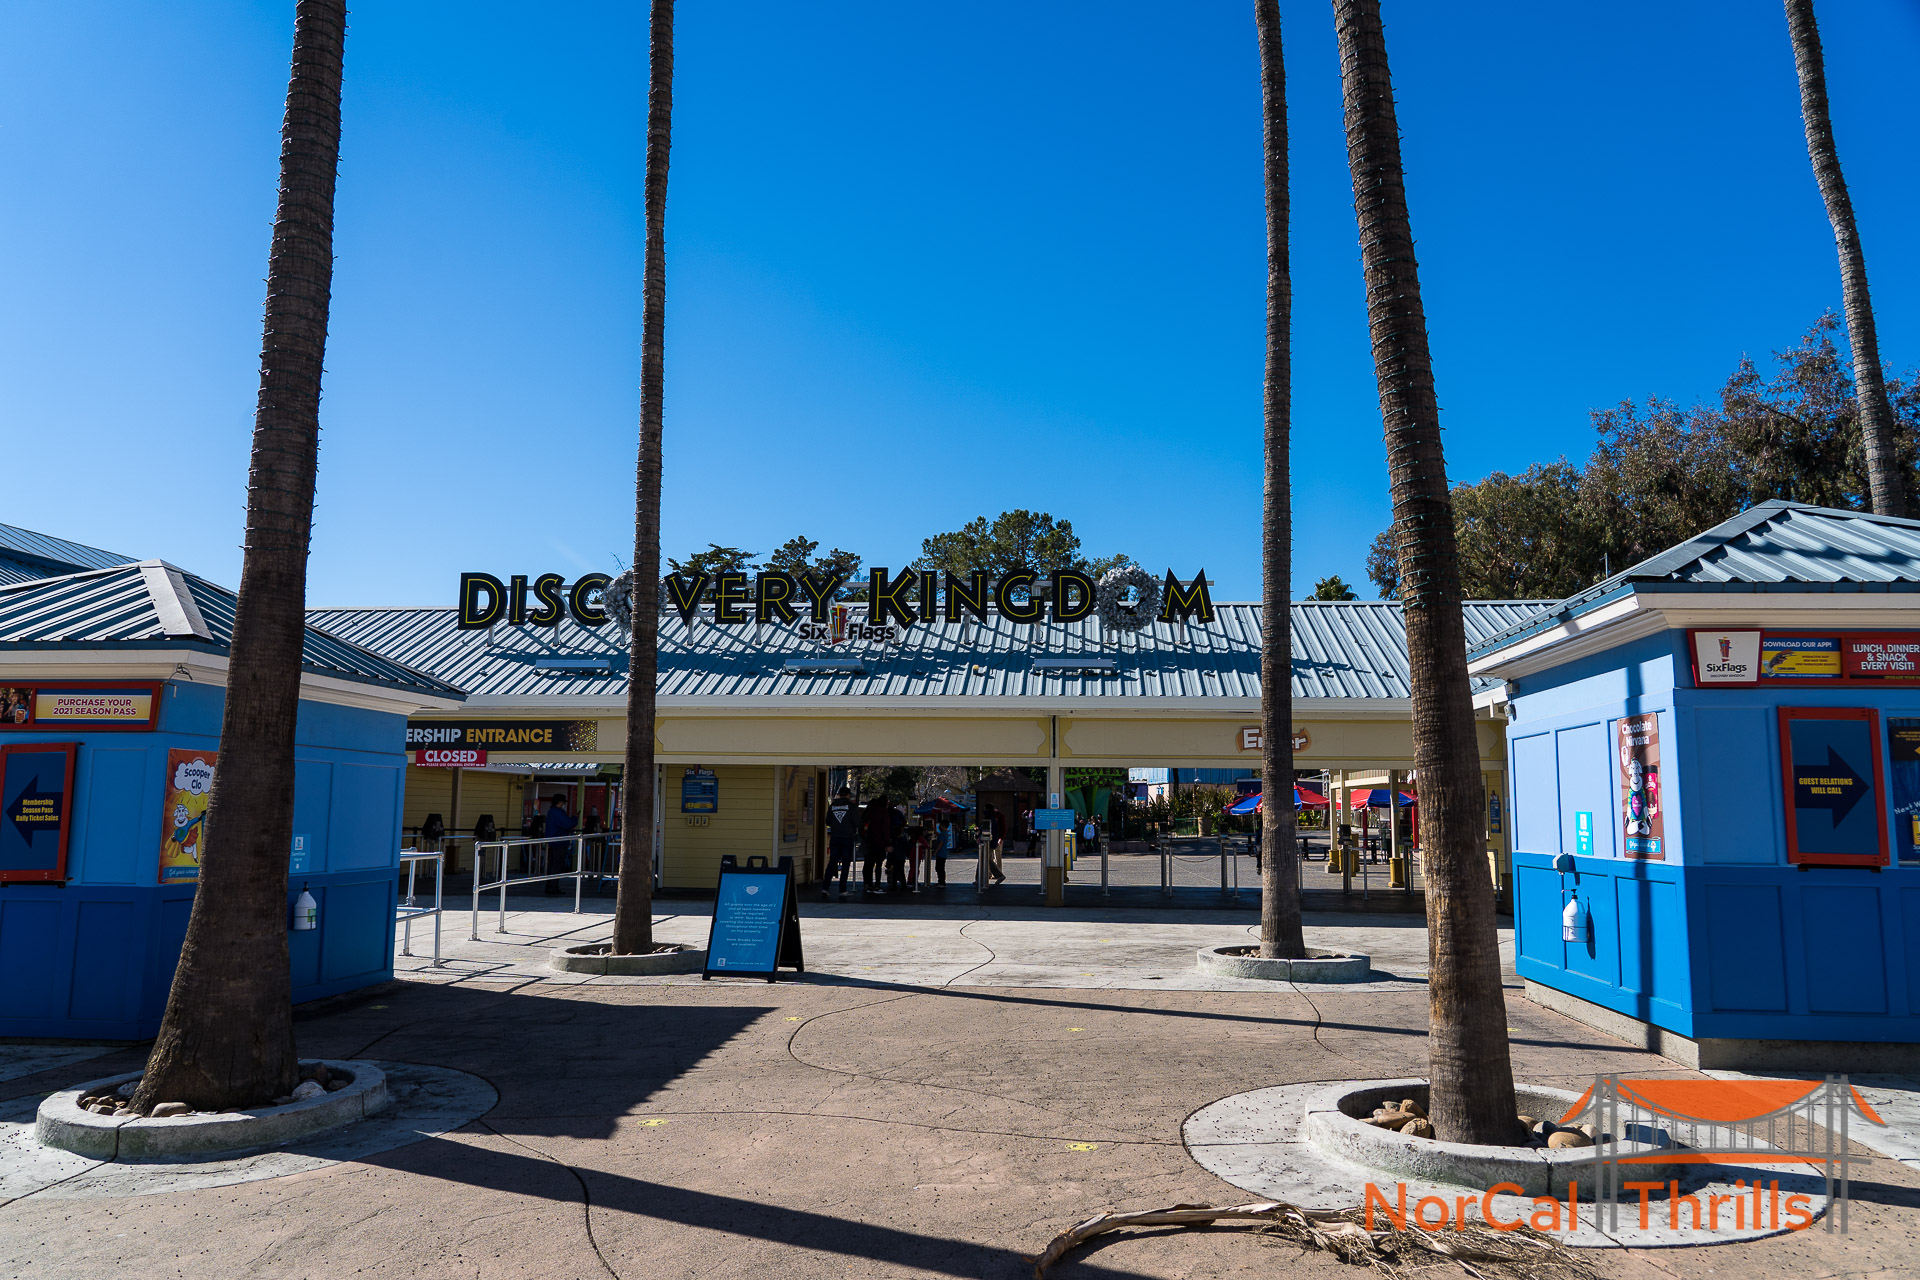 Six Flags Discovery Kingdom Update - February 6th, 2021